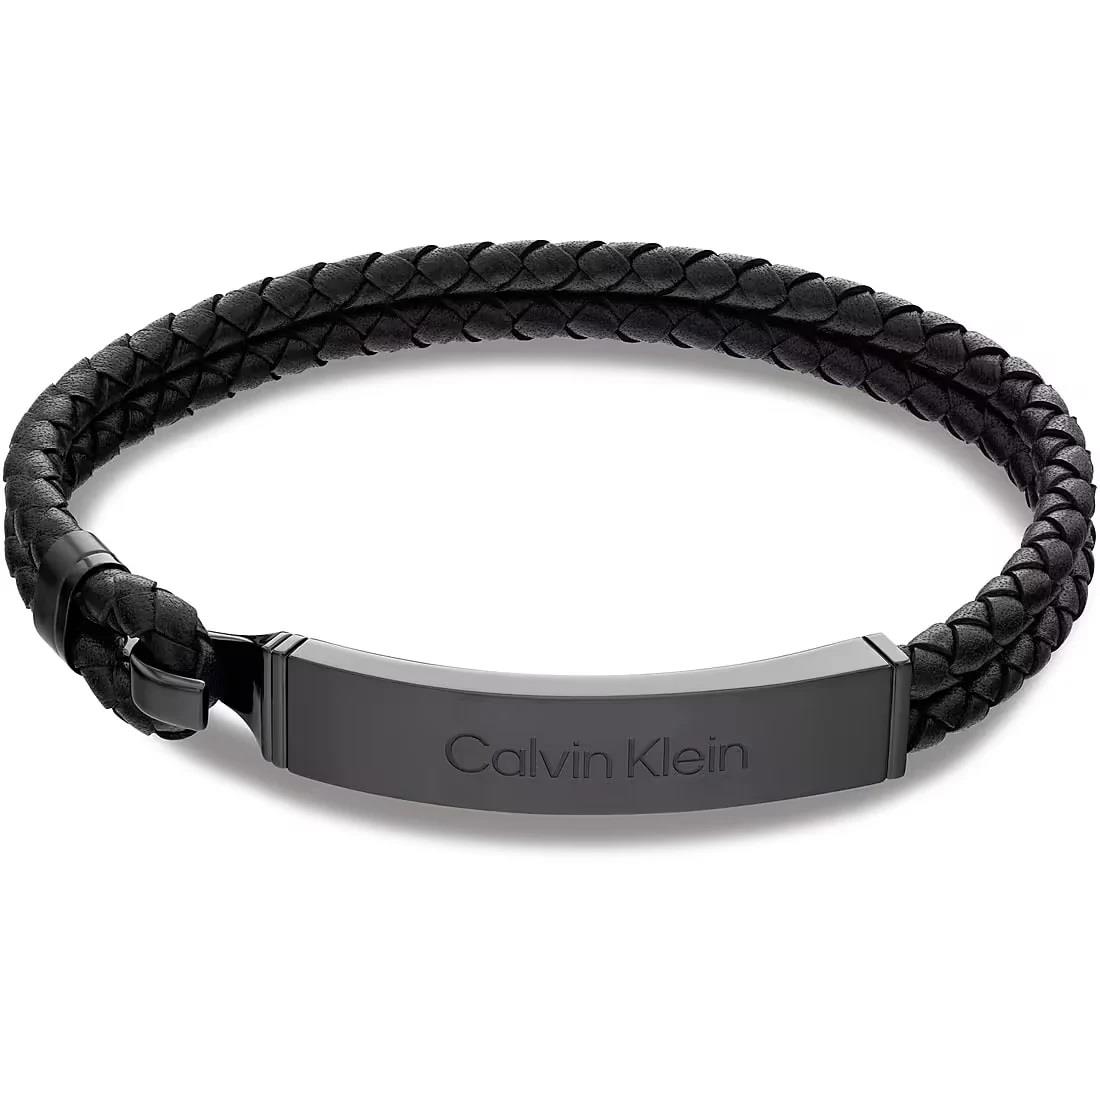 CK men's bracelet in black leather - CALVIN KLEIN